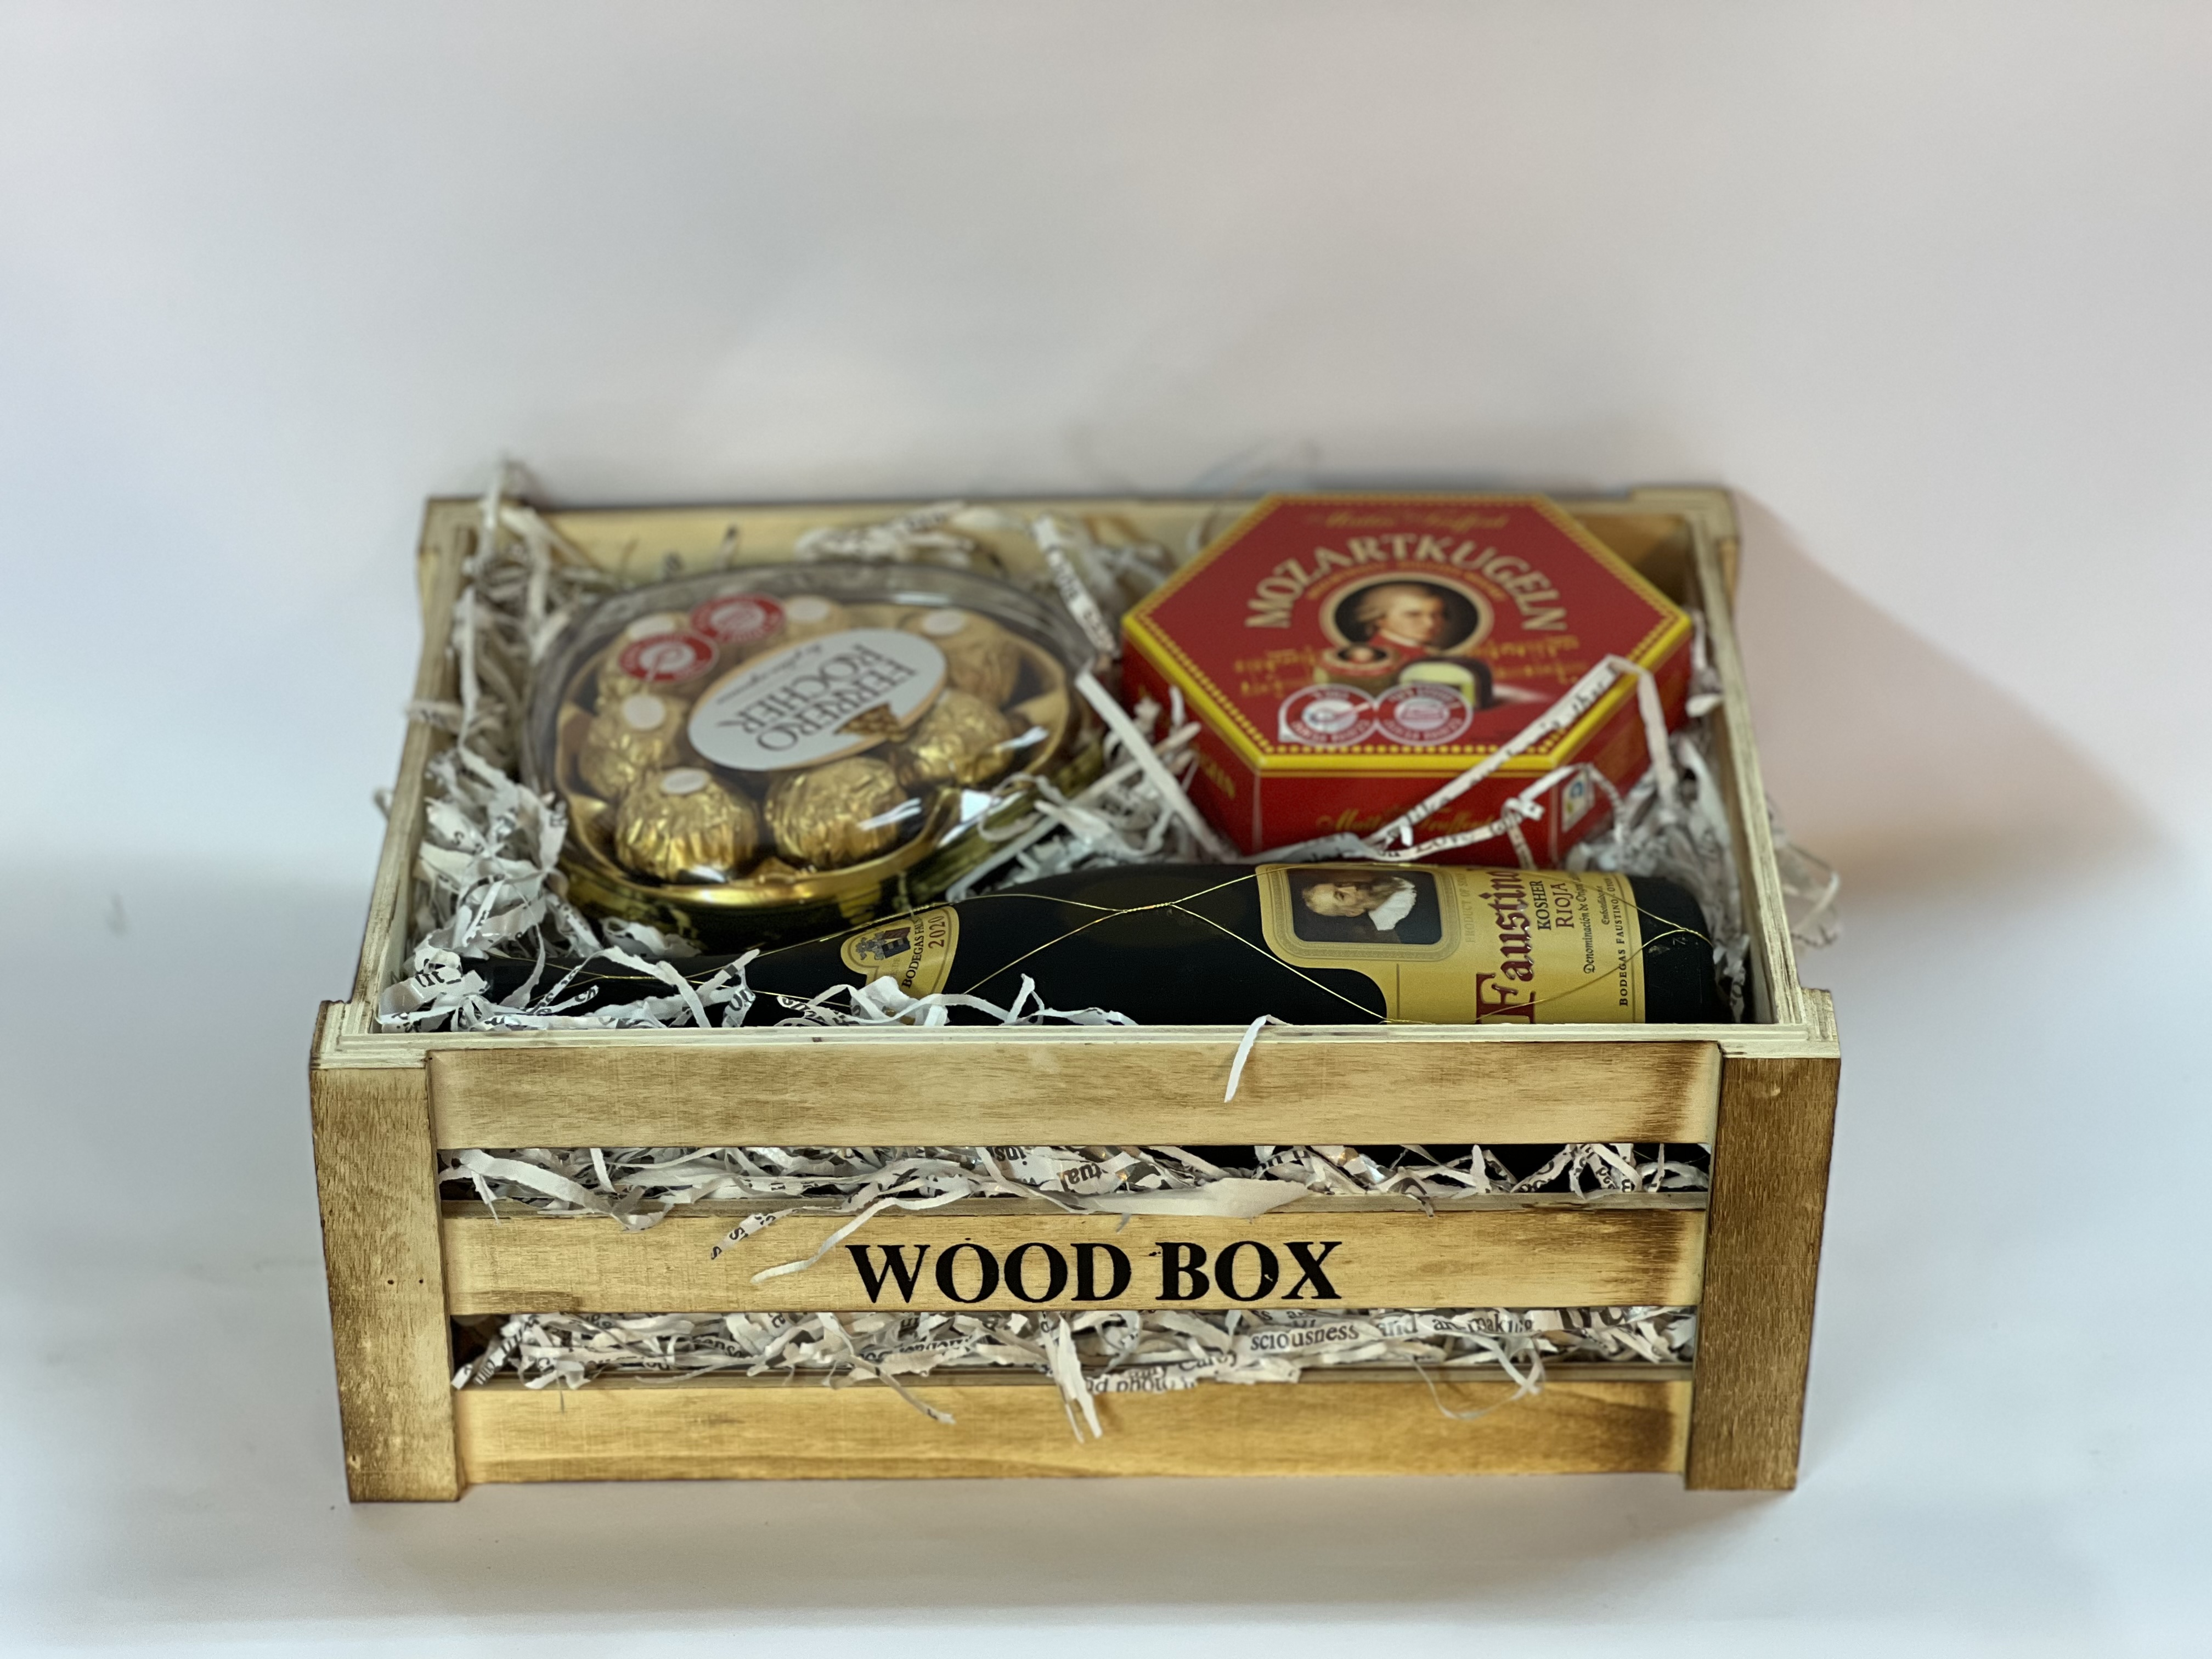 European case in a wooden box